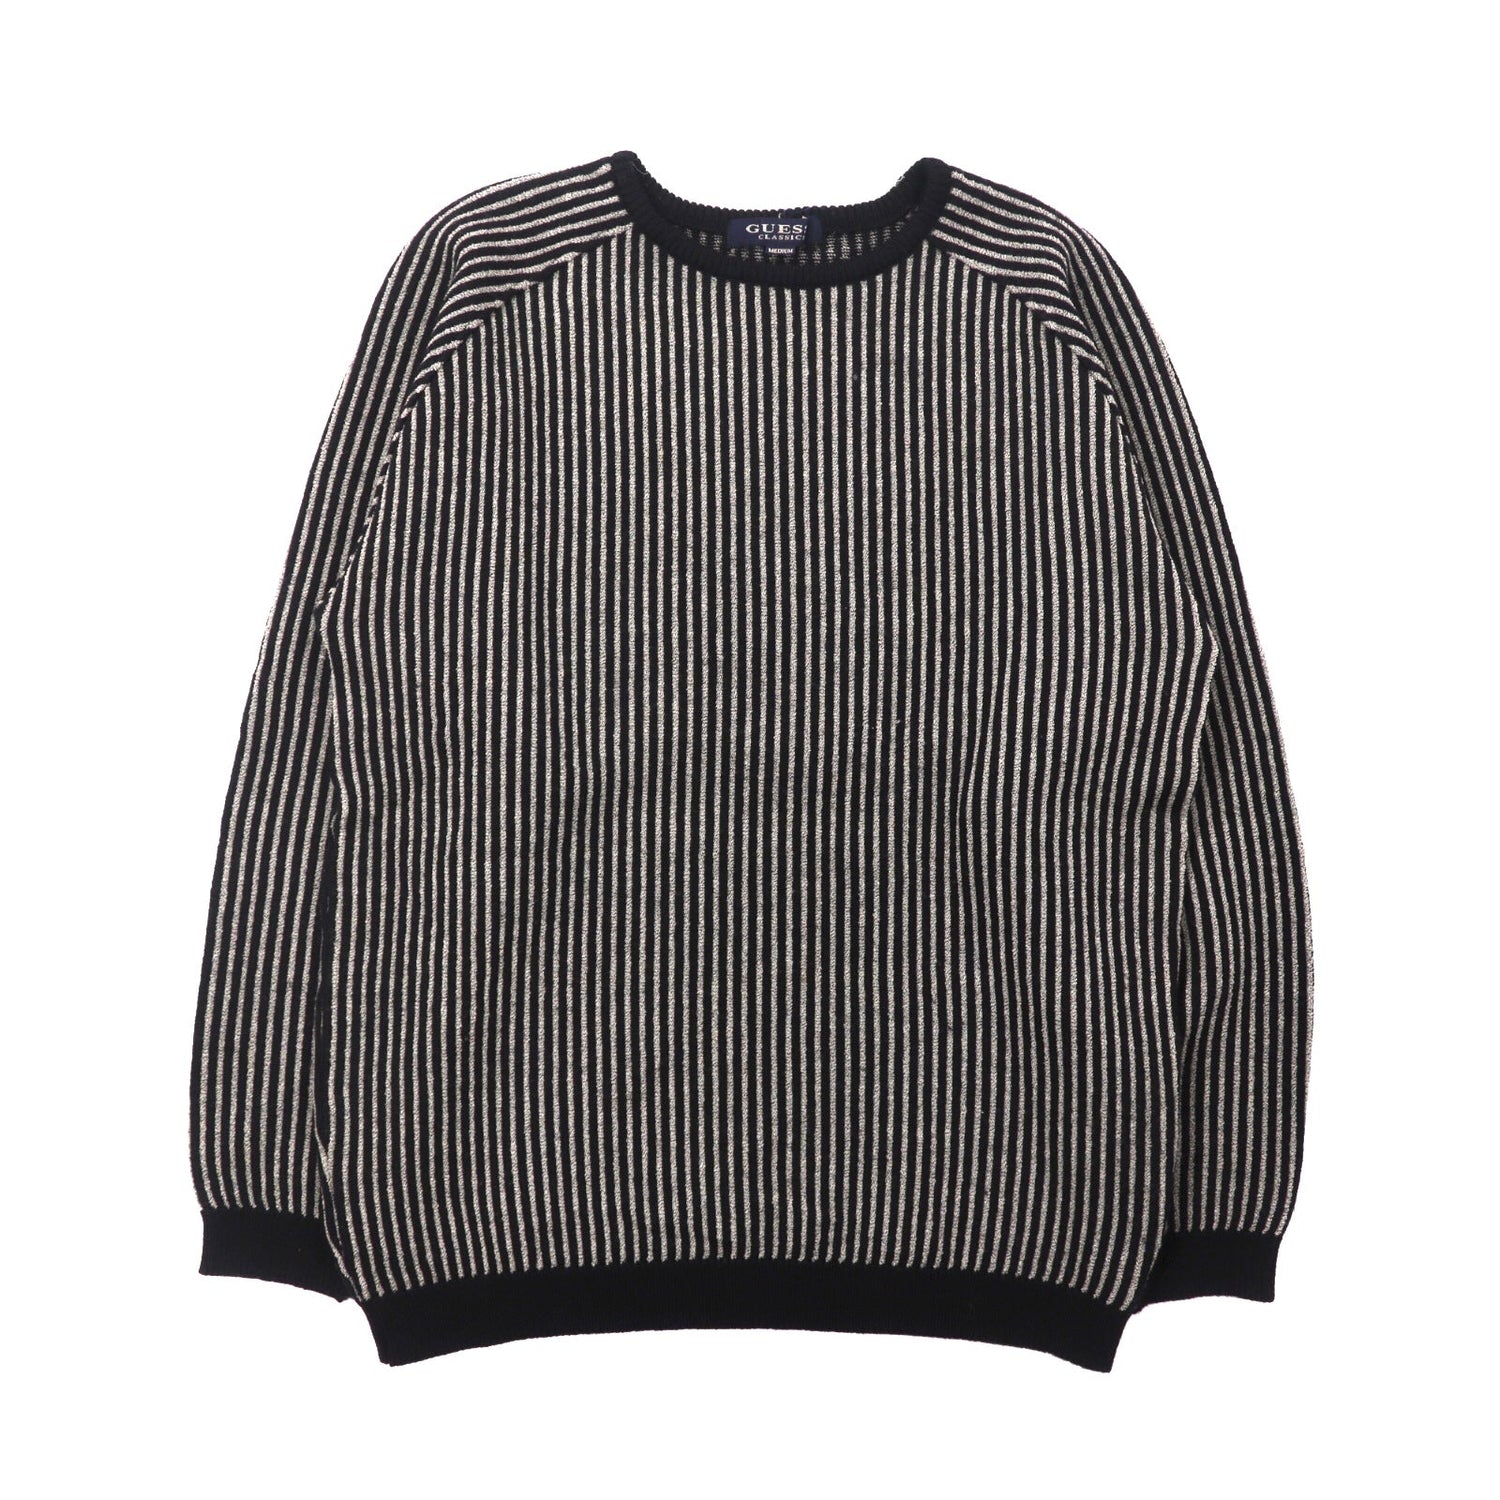 Guess Classics Knit Sweater M Black Striped Wool Japan MADE